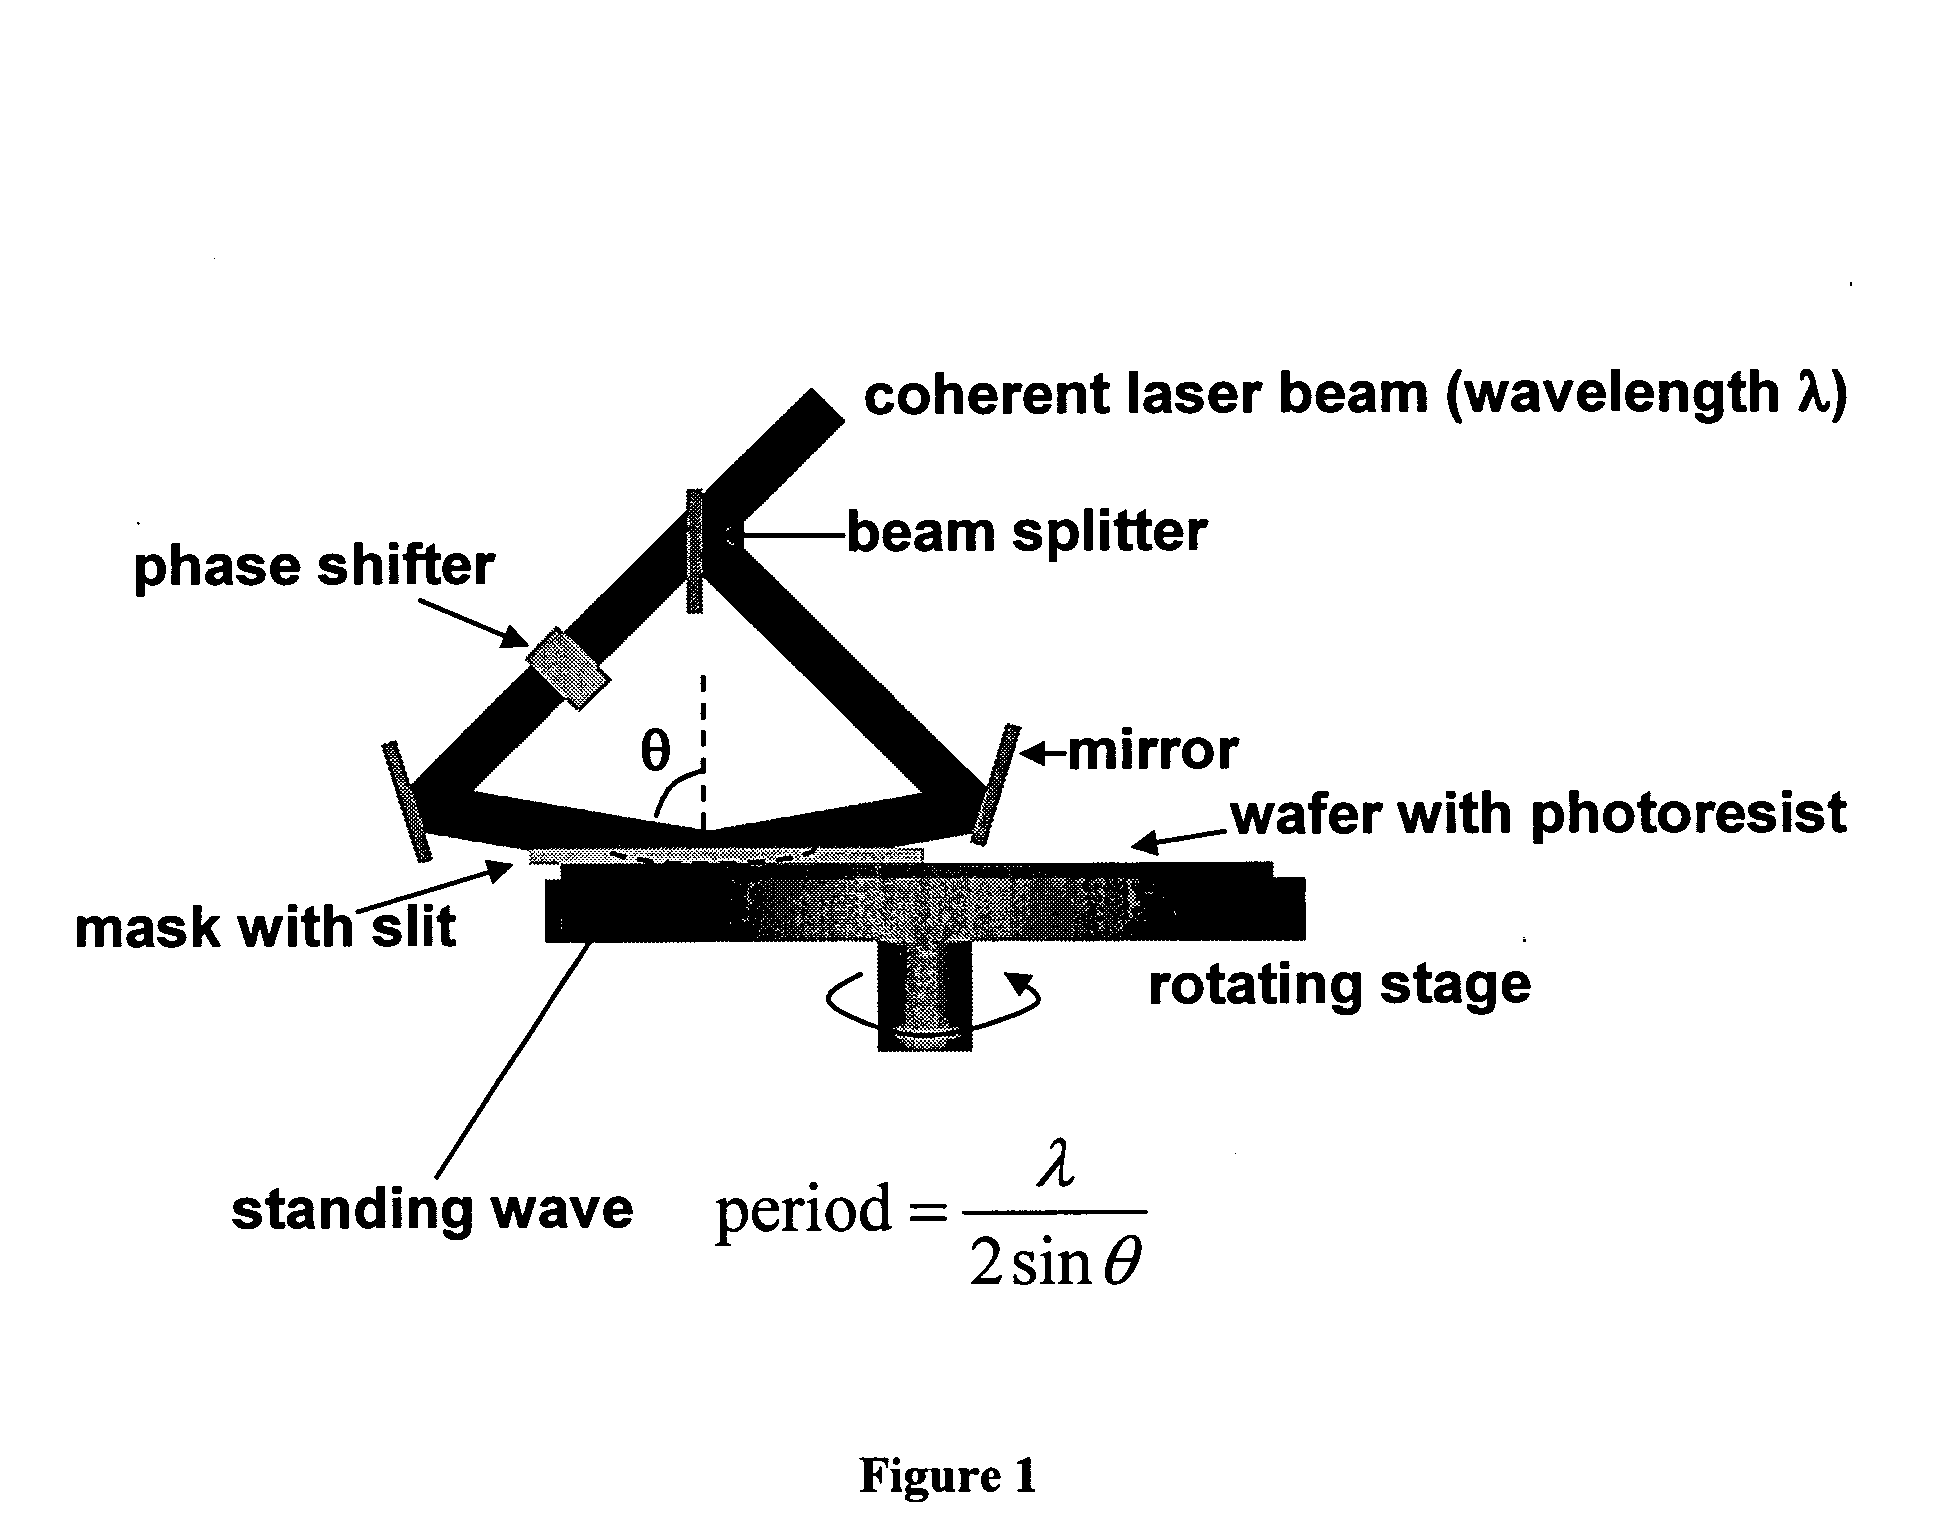 Rotary apertured interferometric lithography (RAIL)